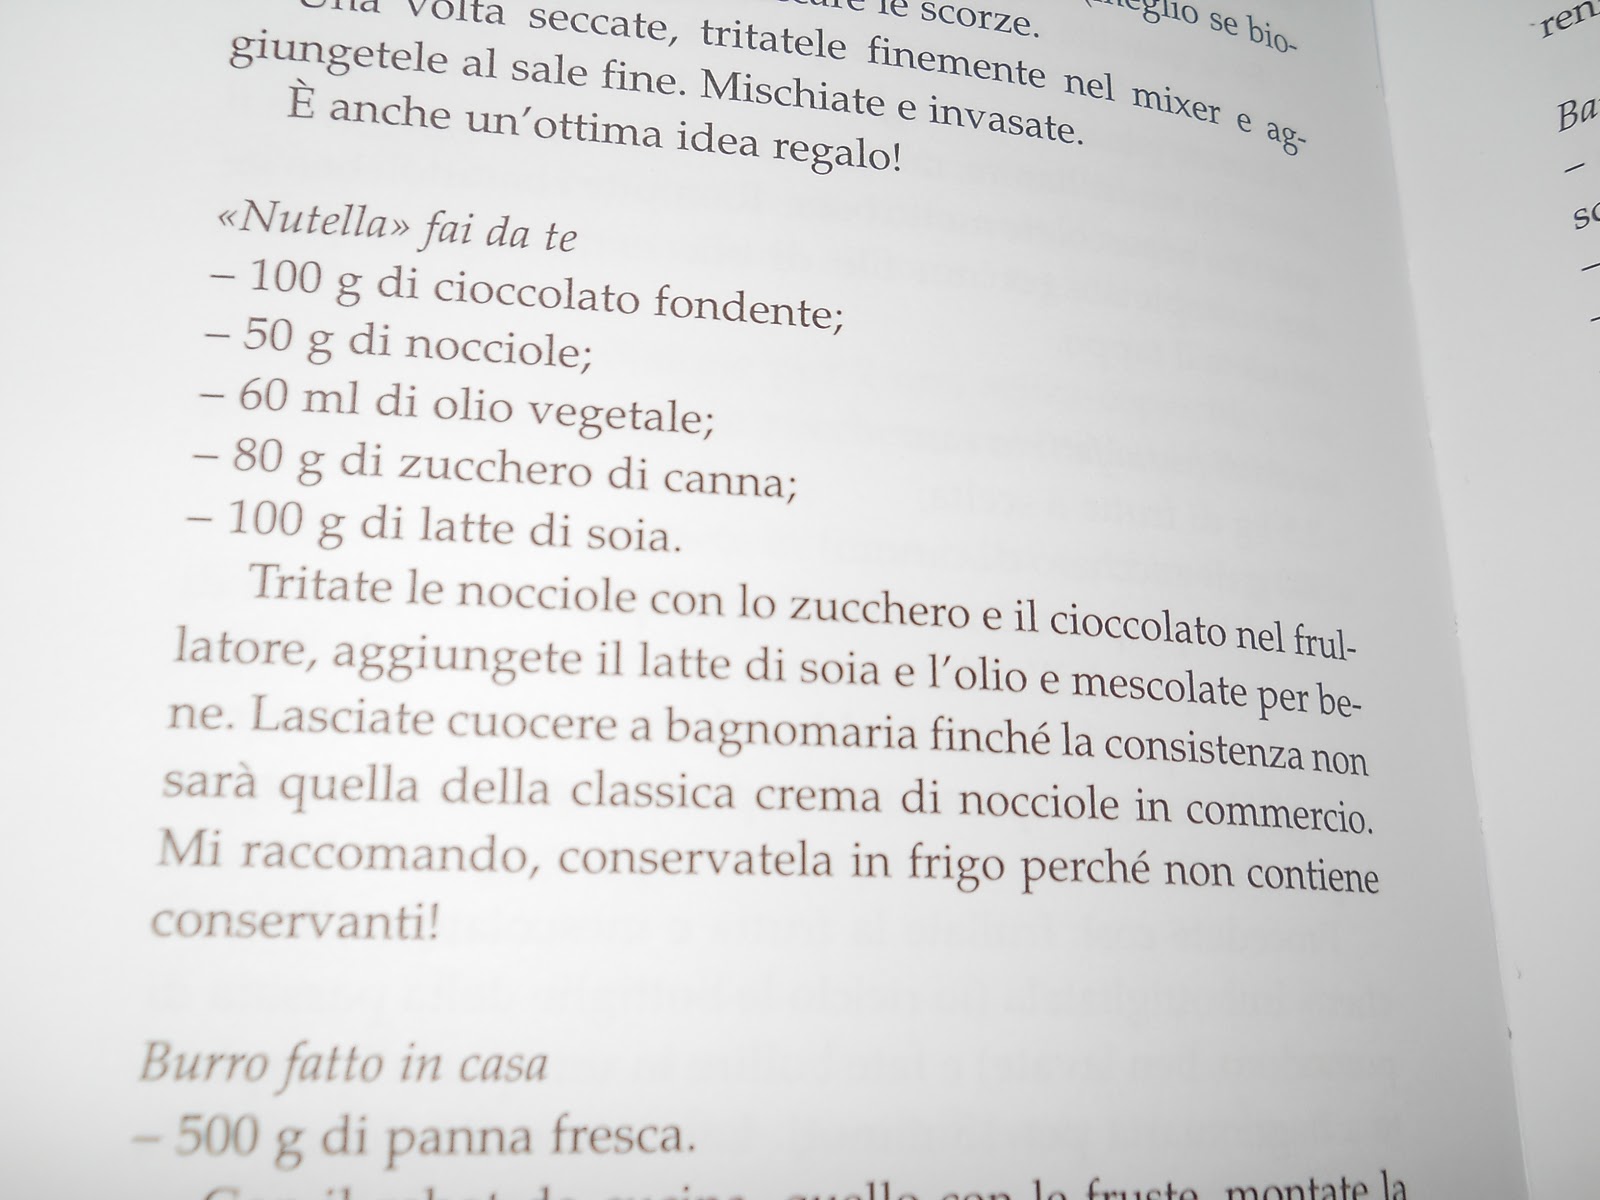 Ricetta - Nutella Casalinga  - Pagina 2 Immagine 947